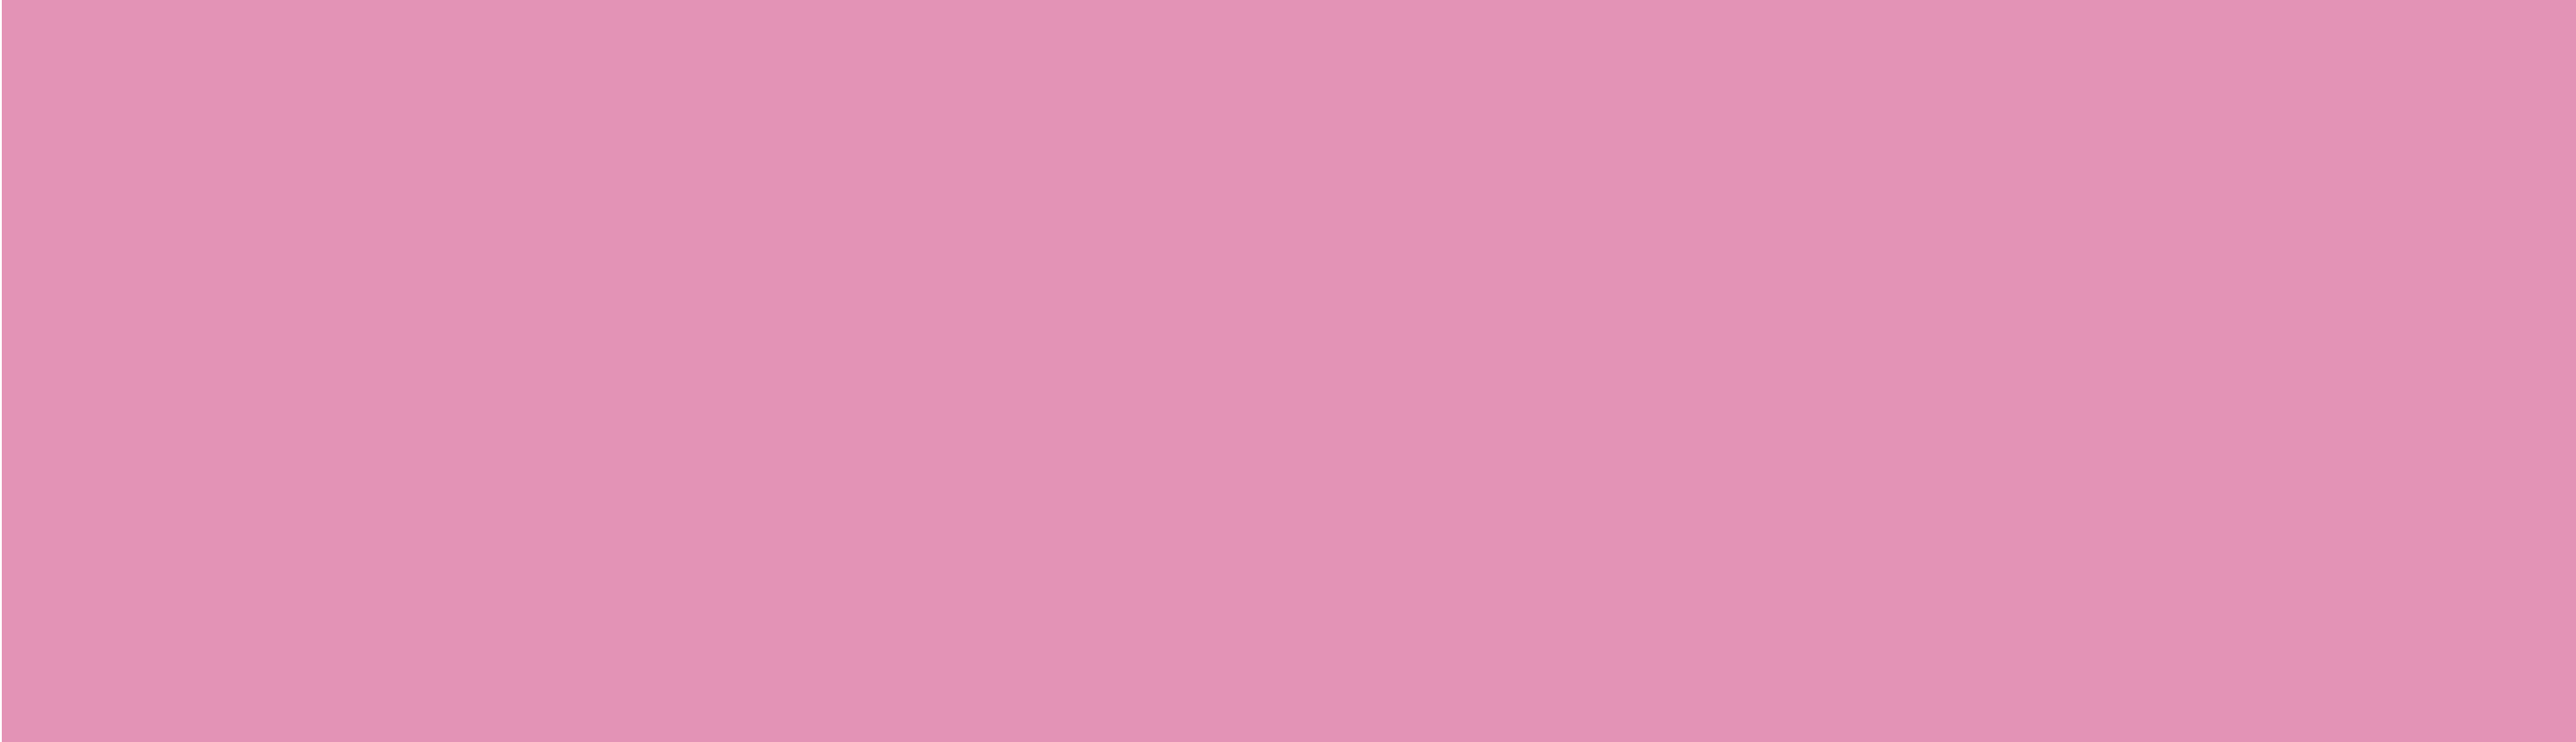 fondo rosa